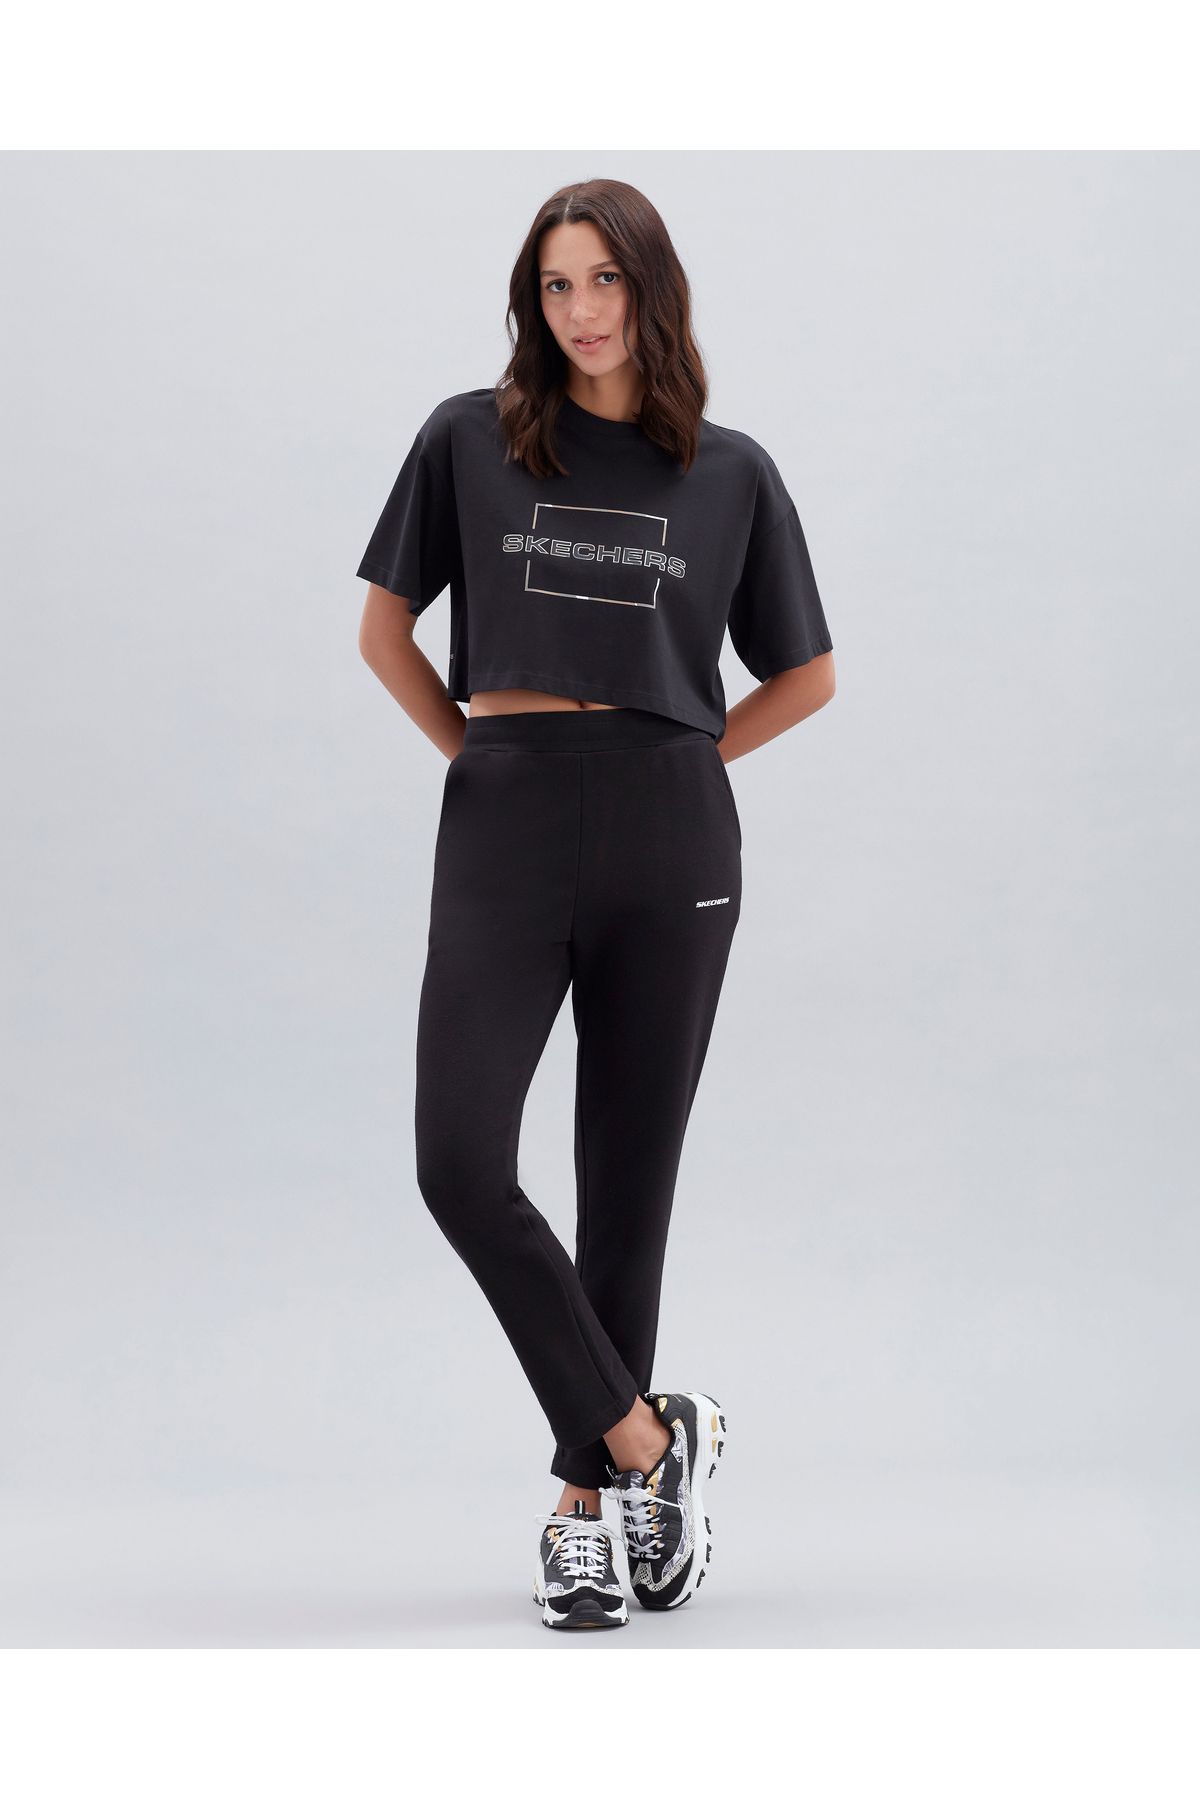 Skechers W Graphic Tee Big Logo T-shirt Kadın Siyah Tshirt S212923-001